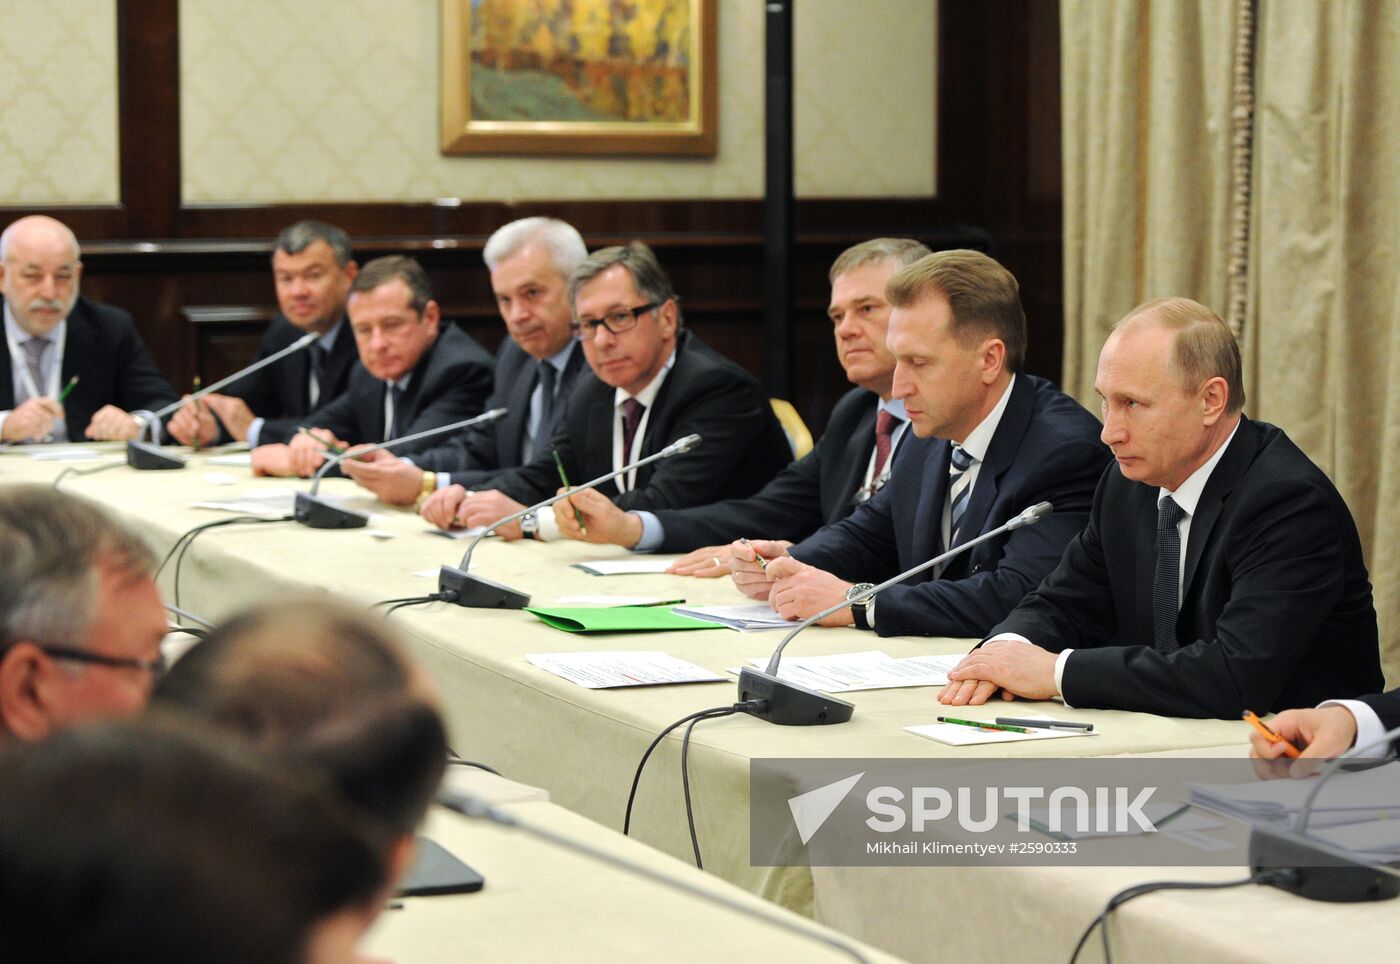 Russian President Vladimir Putin attends RUIE conference